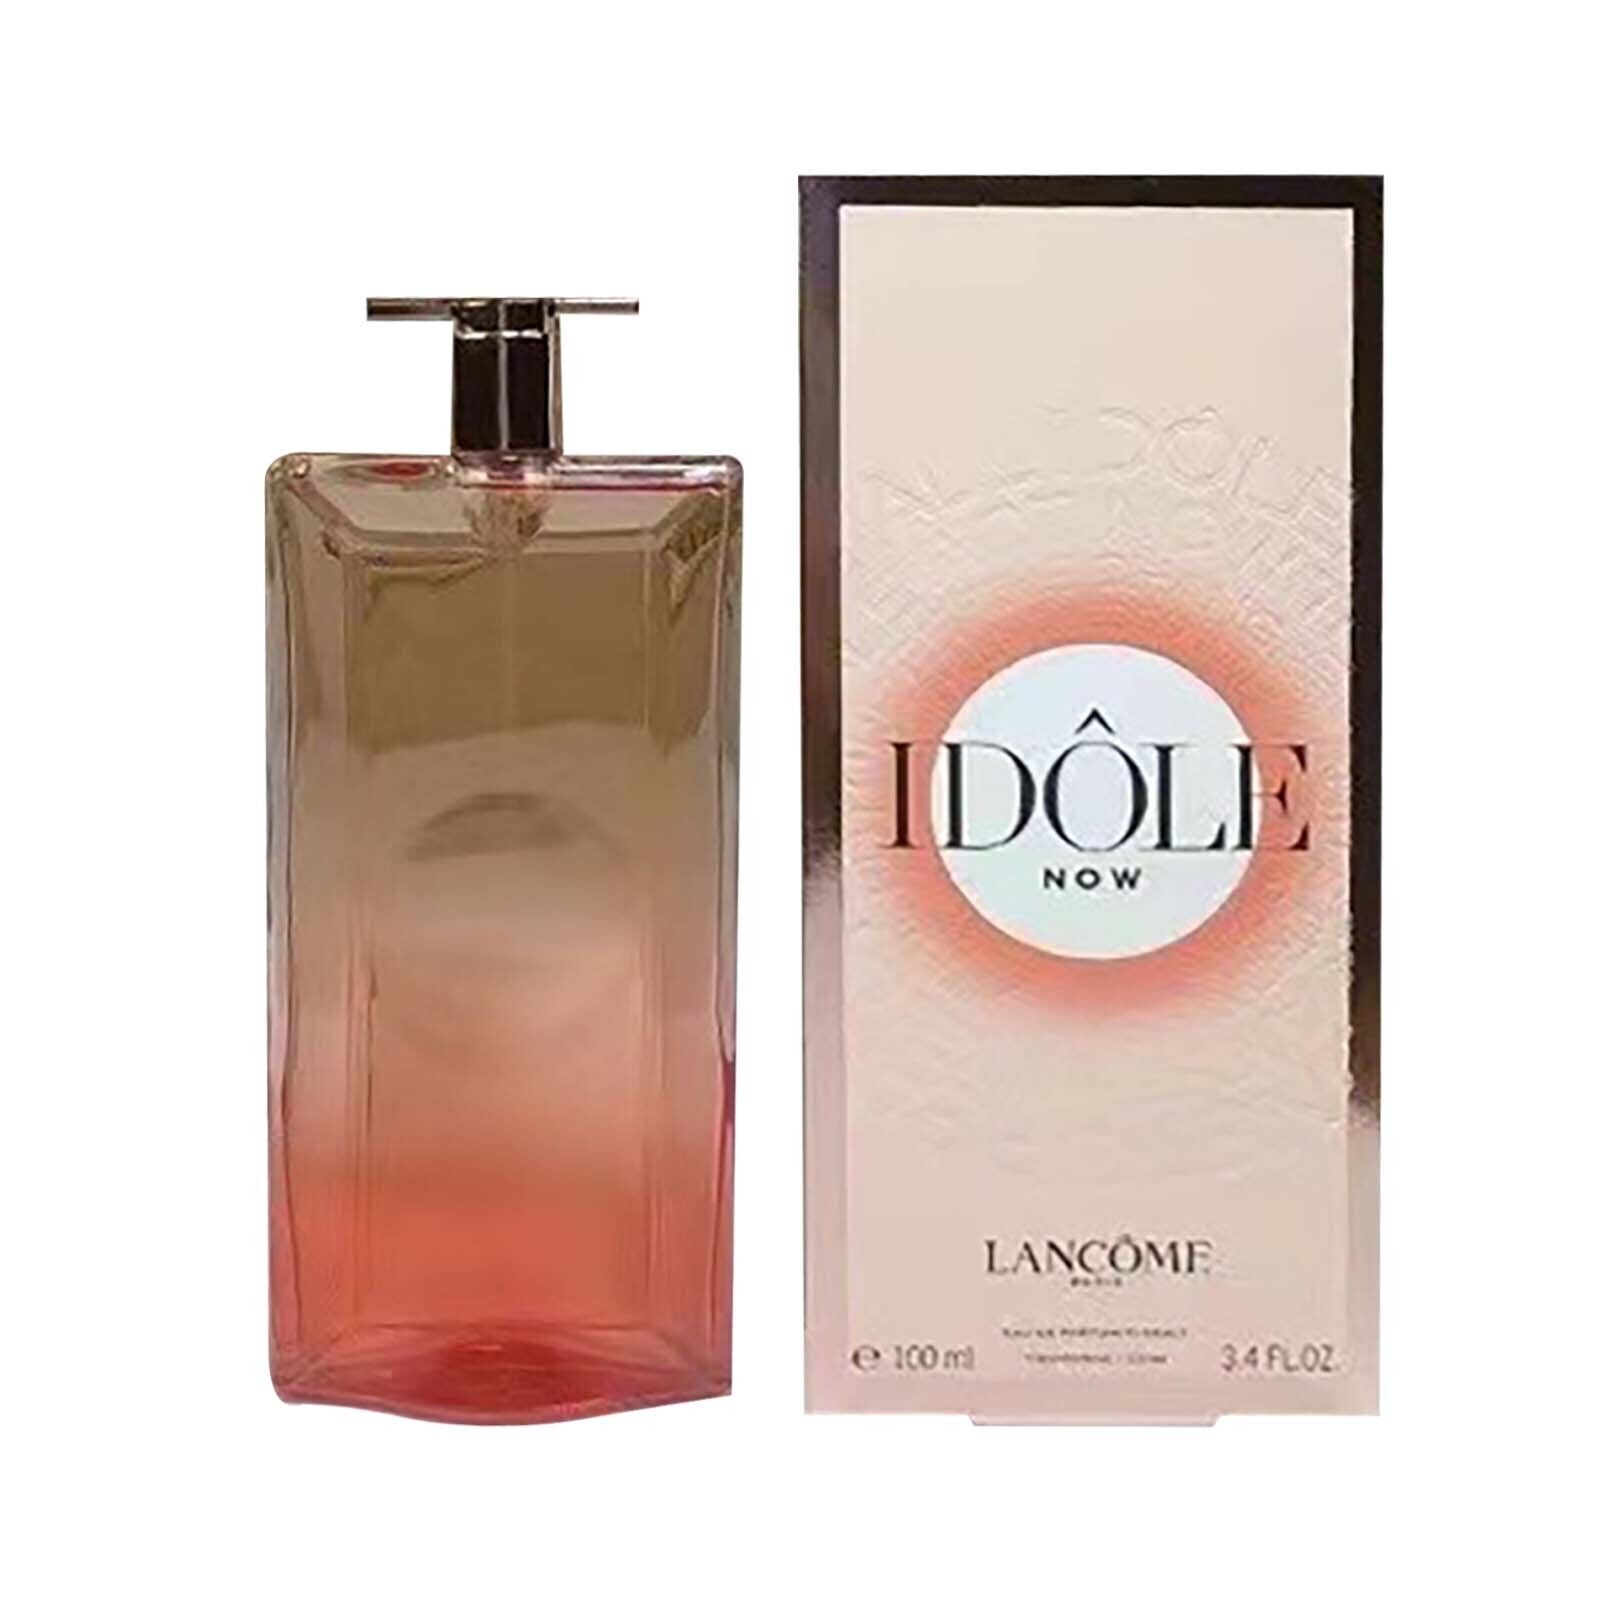 Lancome Idole Now 3.4oz / 100ml Eau De Parfum Spray For Women New In Box